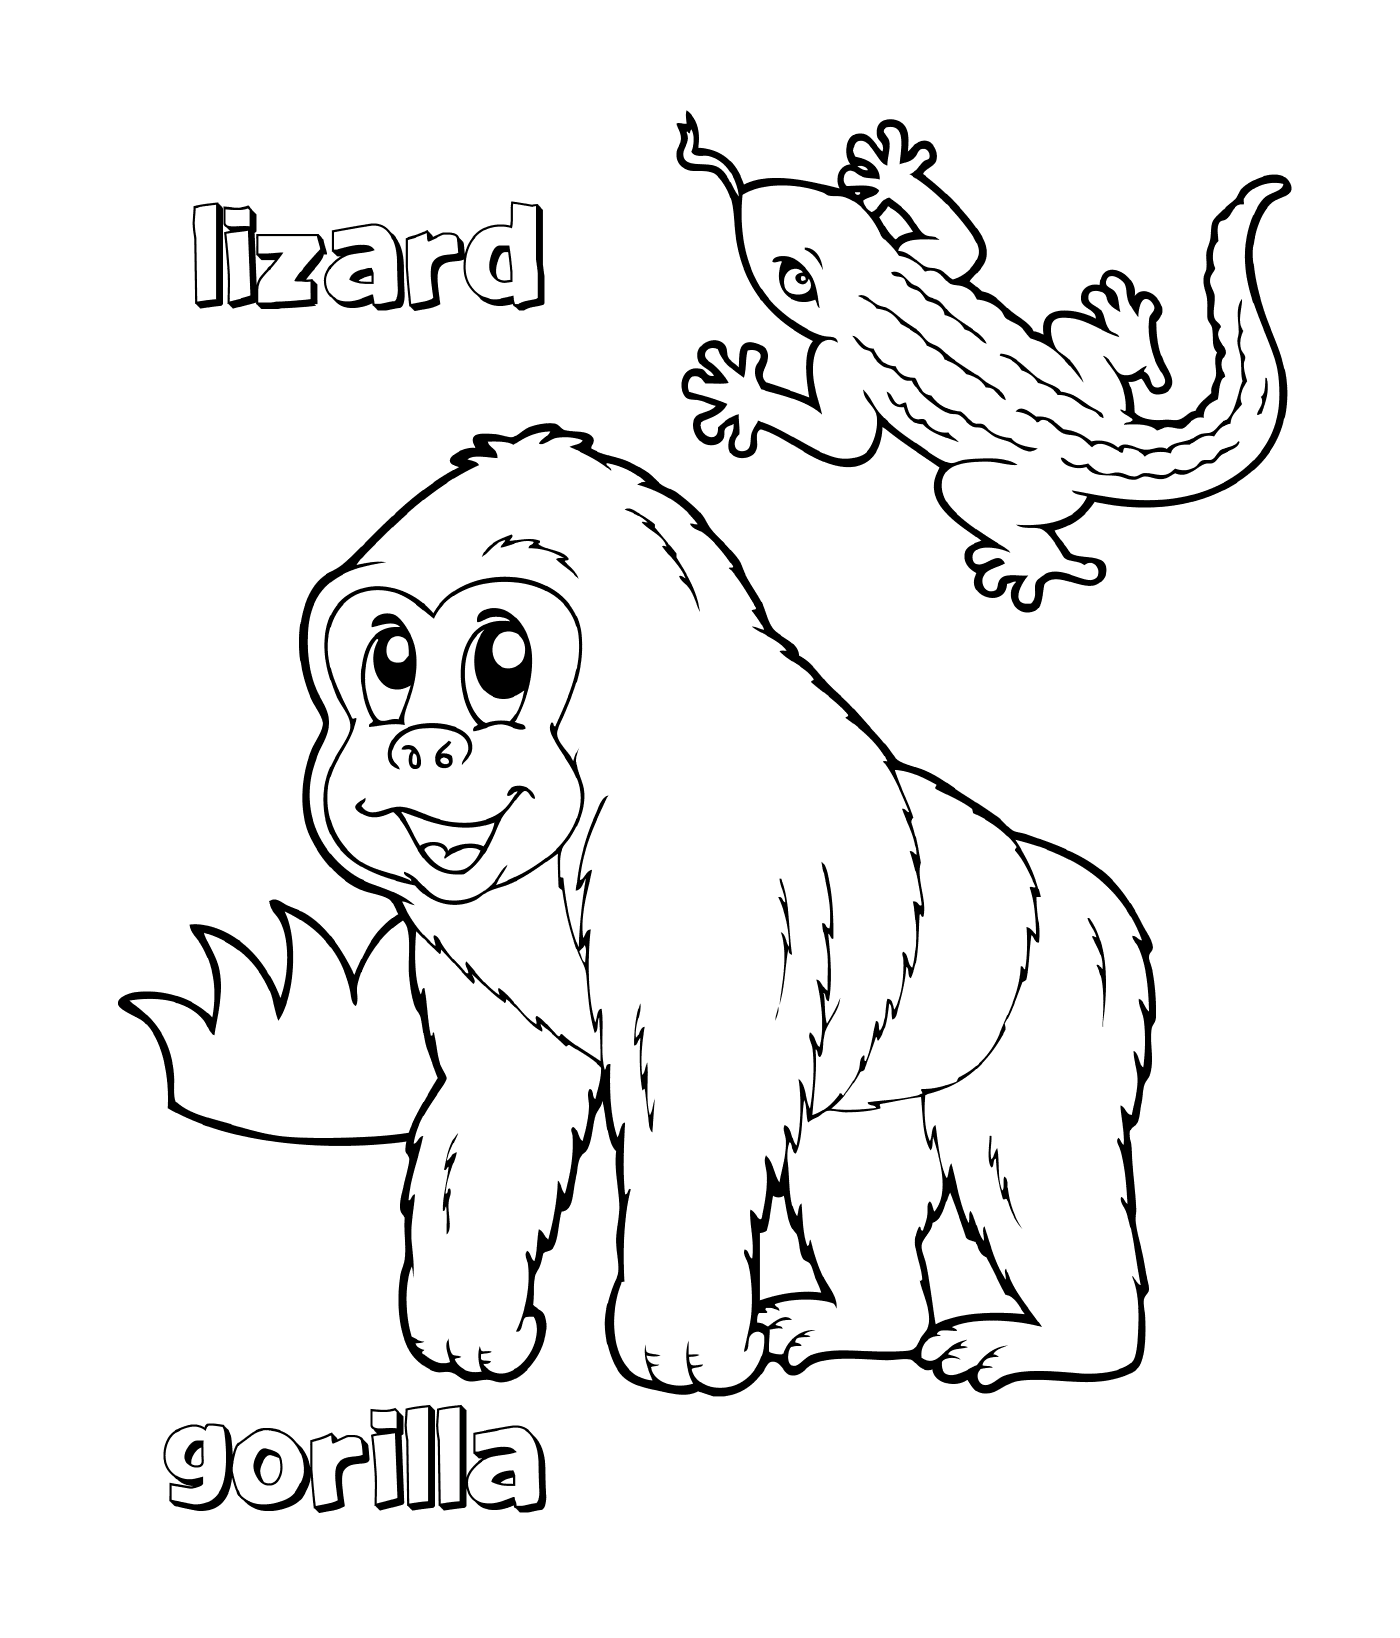  a lizard and a gorilla 